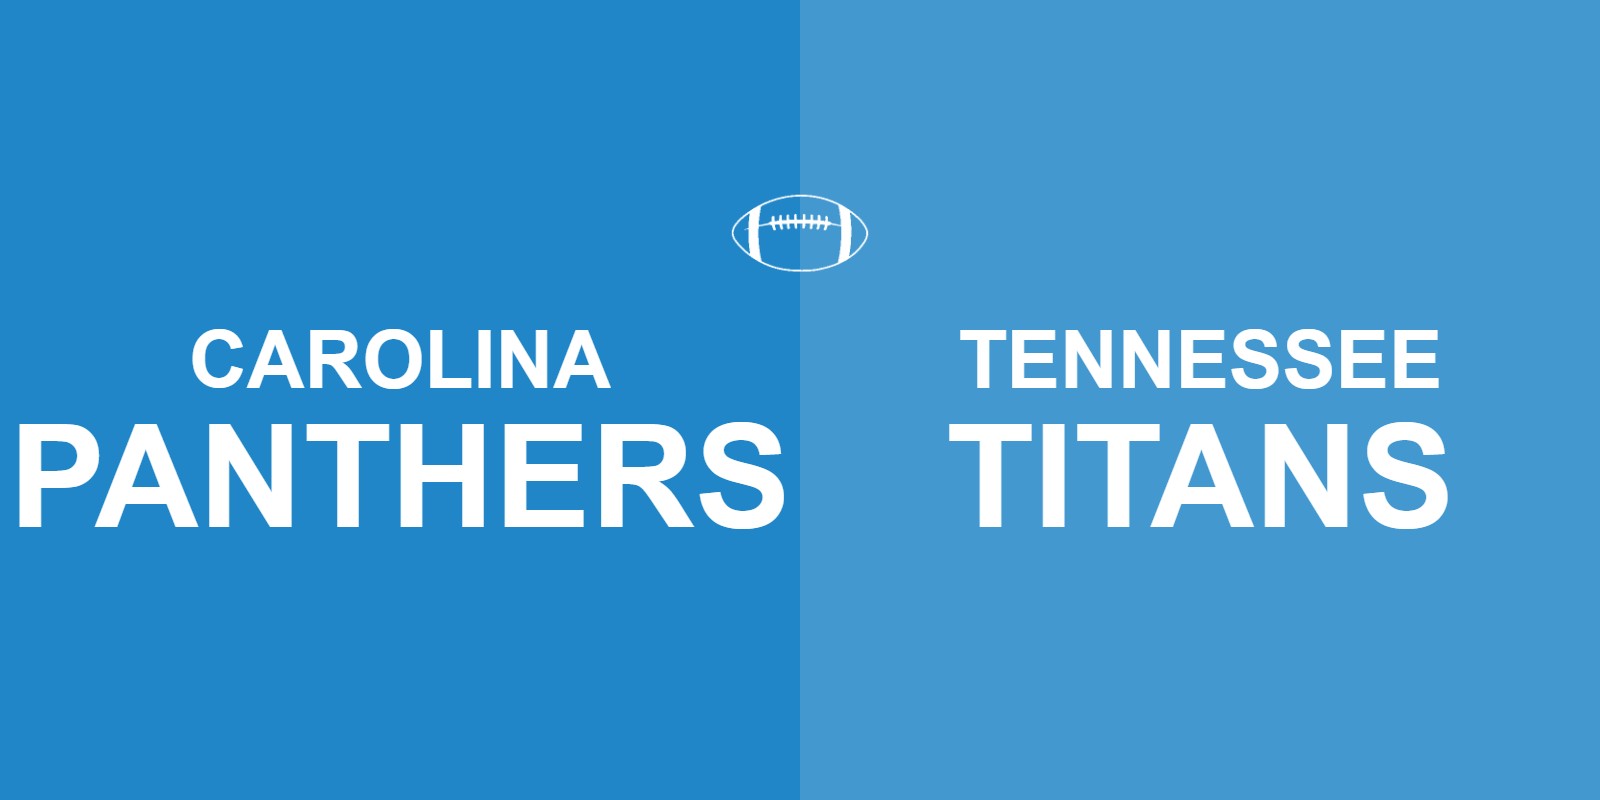 Panthers vs Titans